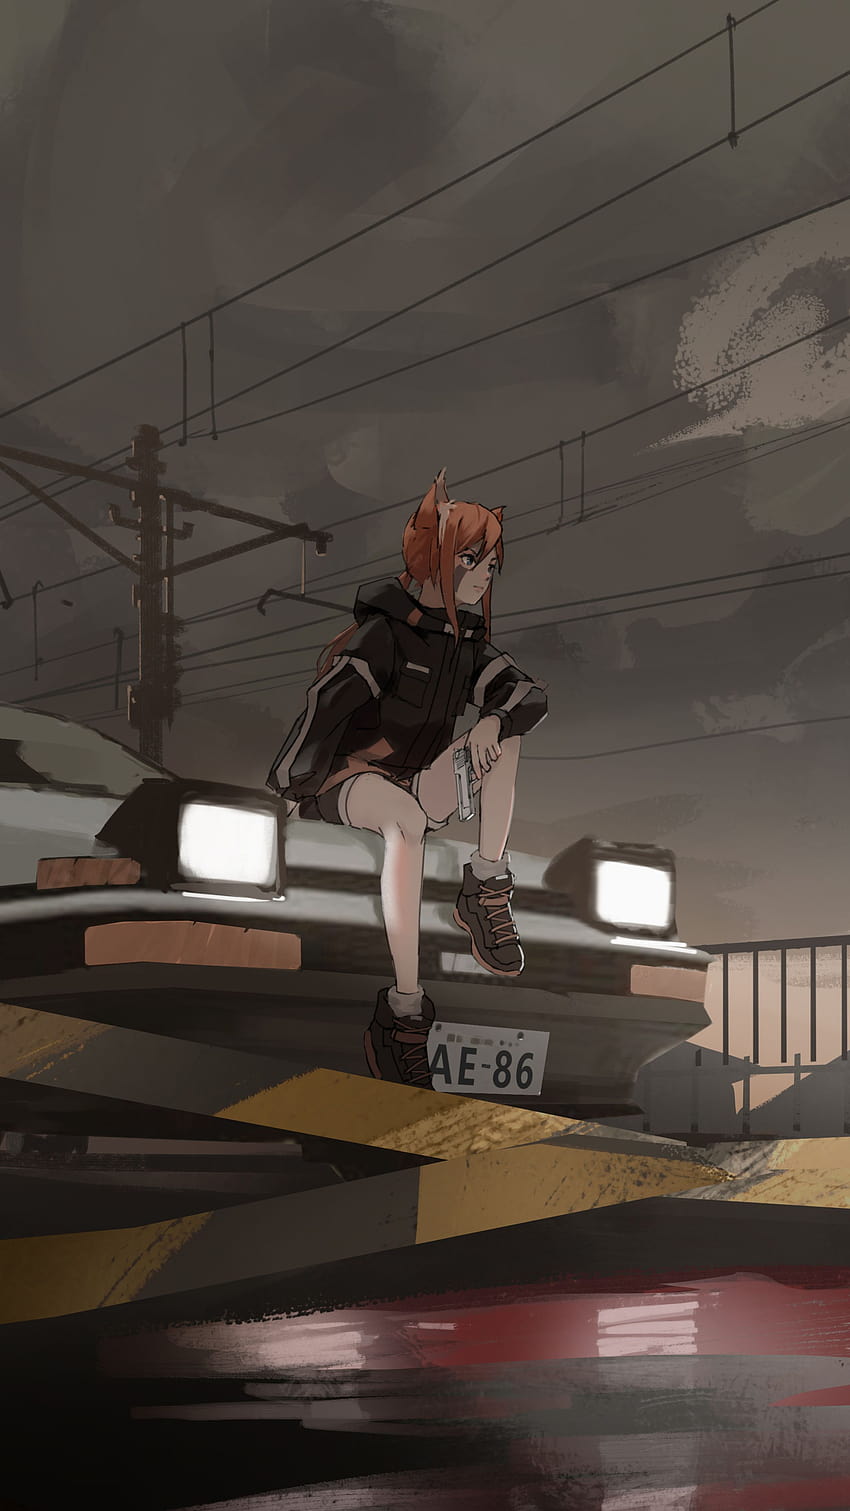 2160x3840 Anime Girl On Train Track With Car Sony Xperia X Xz Z5 Premium Backgrounds And